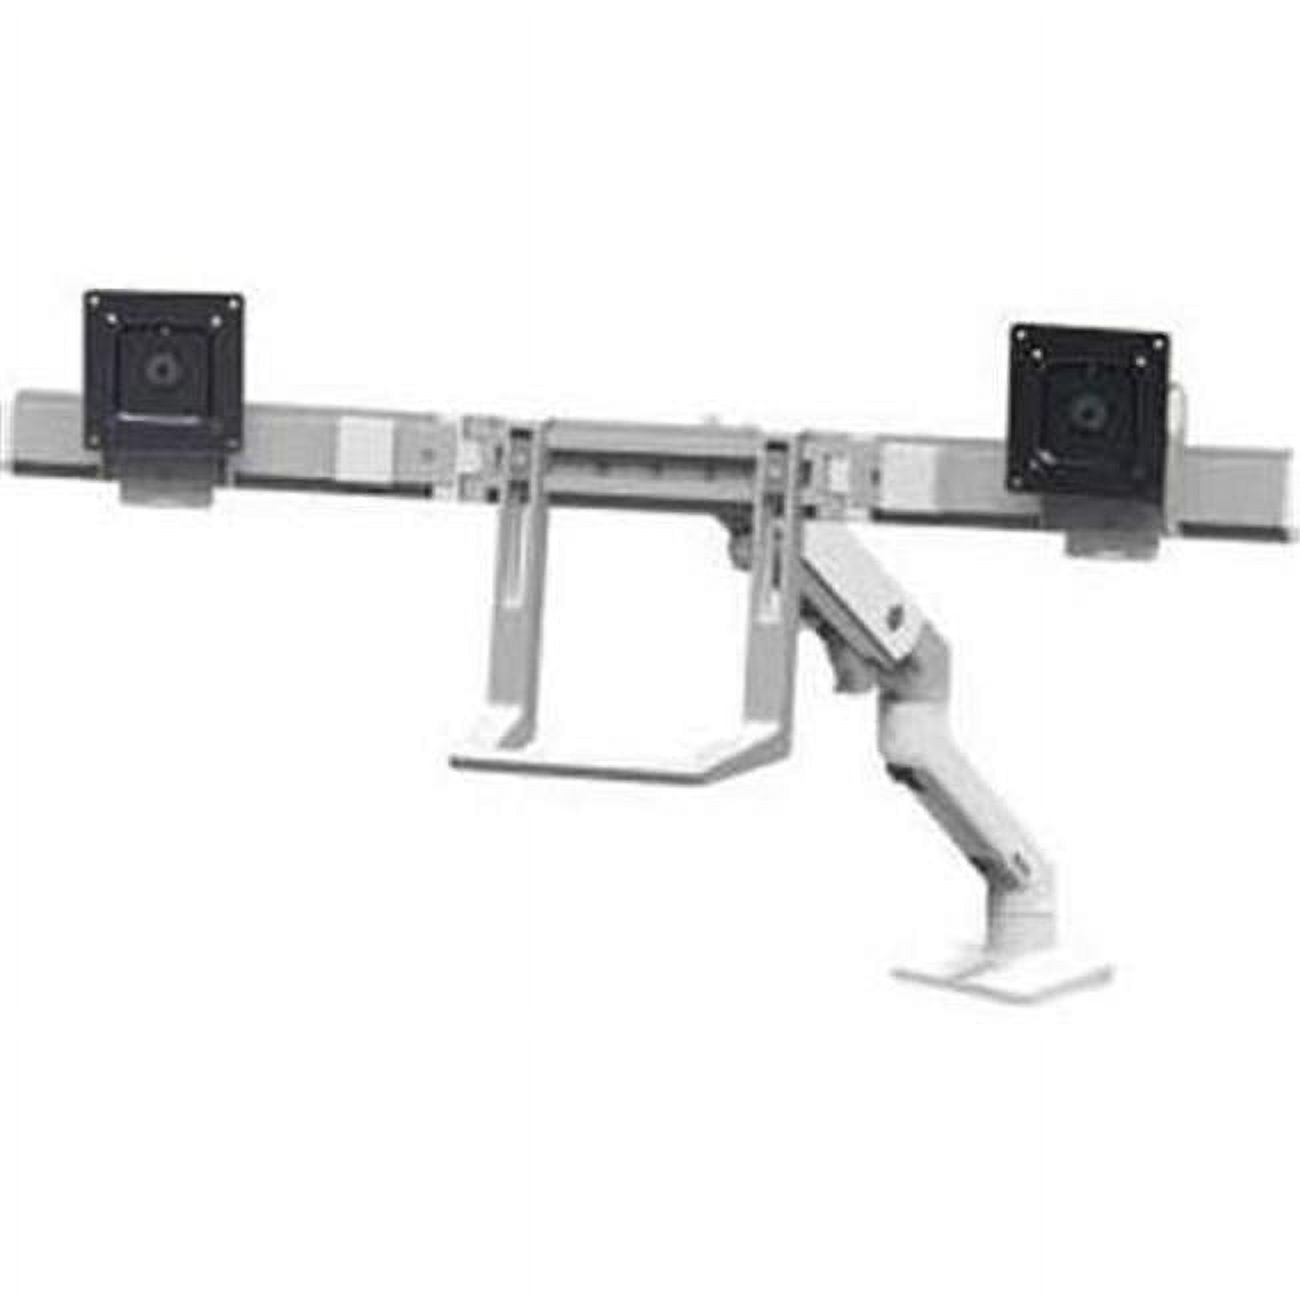 Ergotron 45-476-216 HX Desk Dual Monitor Arm Mounting Kit, Bright White - image 1 of 10